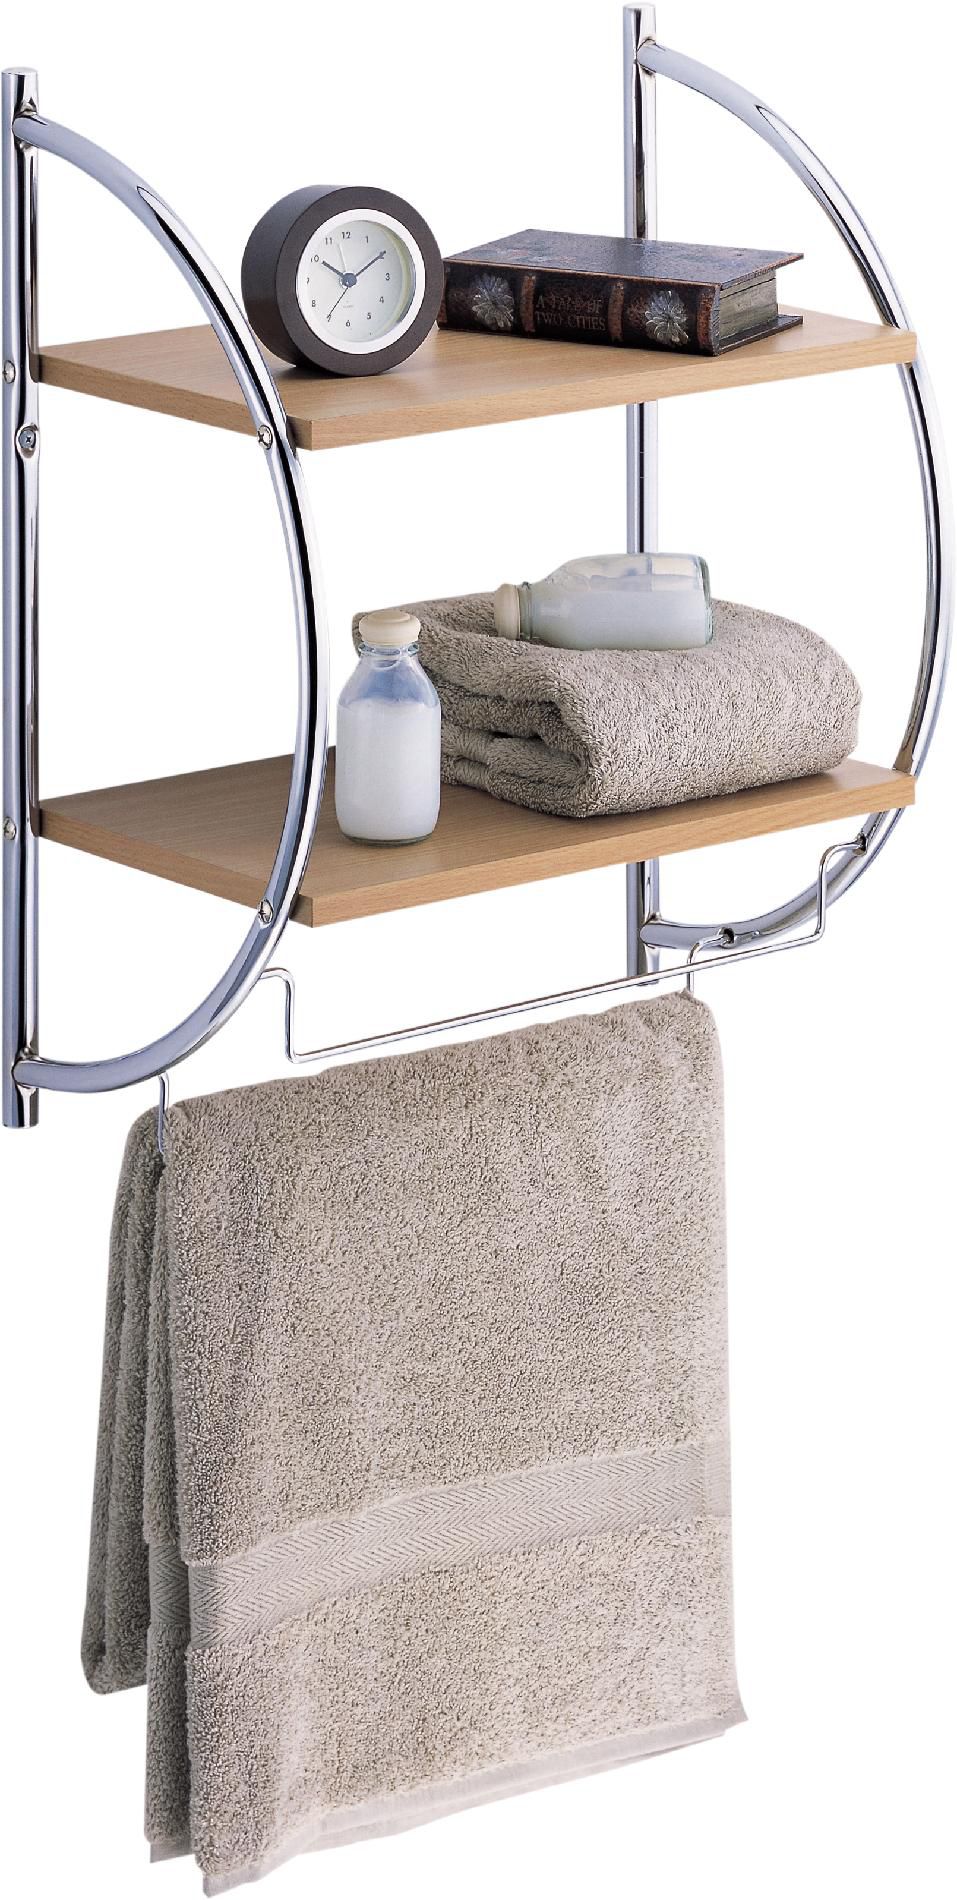 2 Tier Wood Mounting Shelf W/ Towel Bars